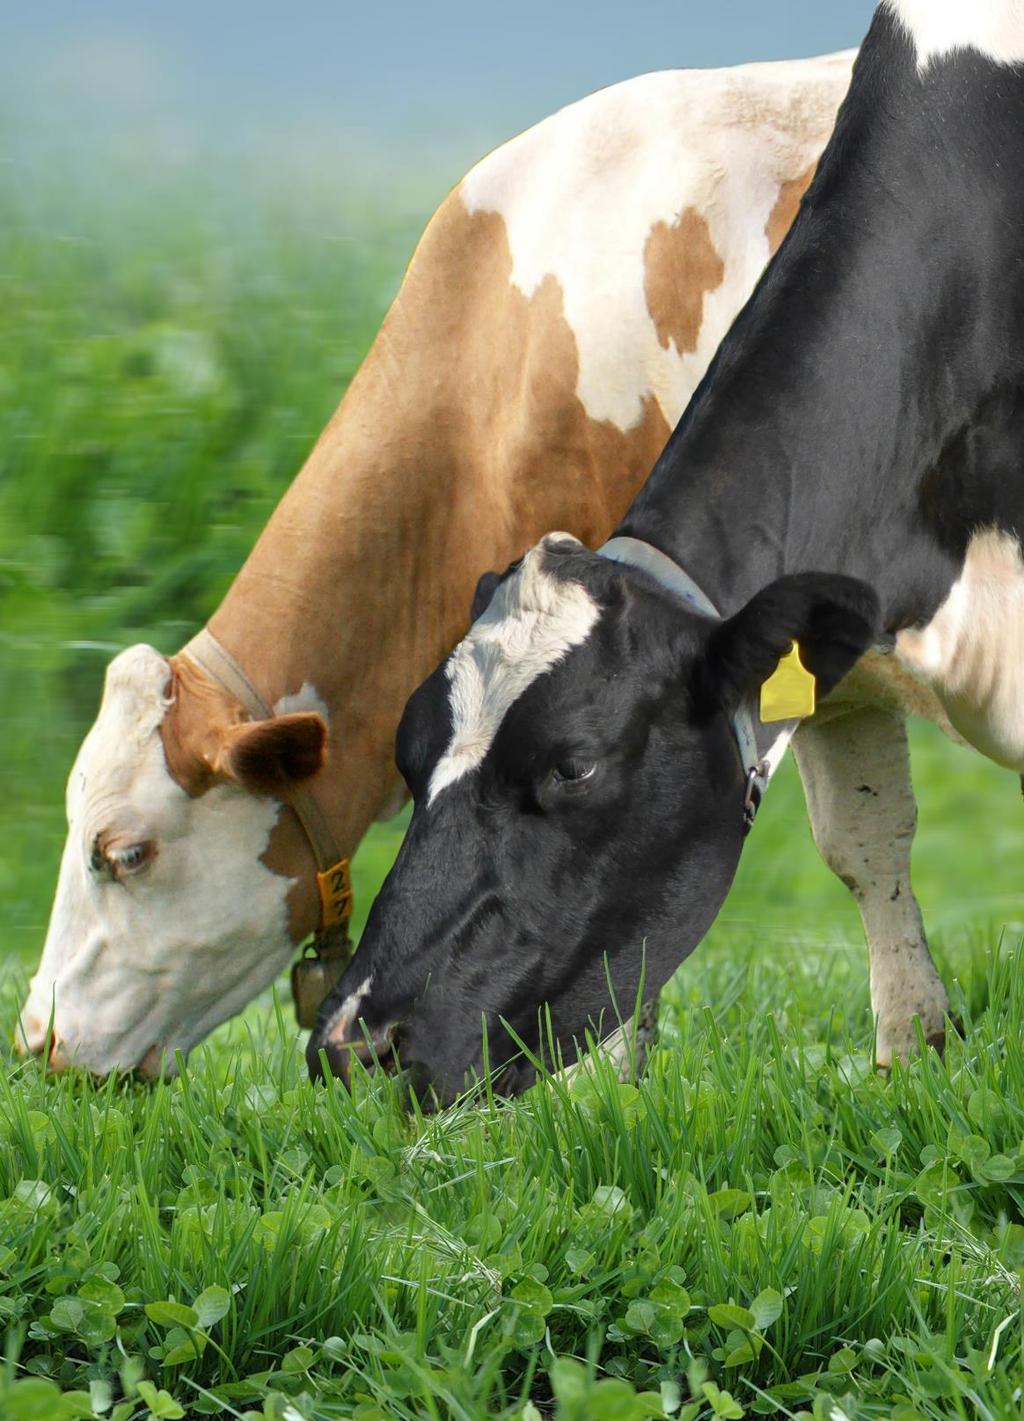 Praxisbetrieben in Österreich Management strategies on dairy farms combining automatic milking with grazing case studies in Austria